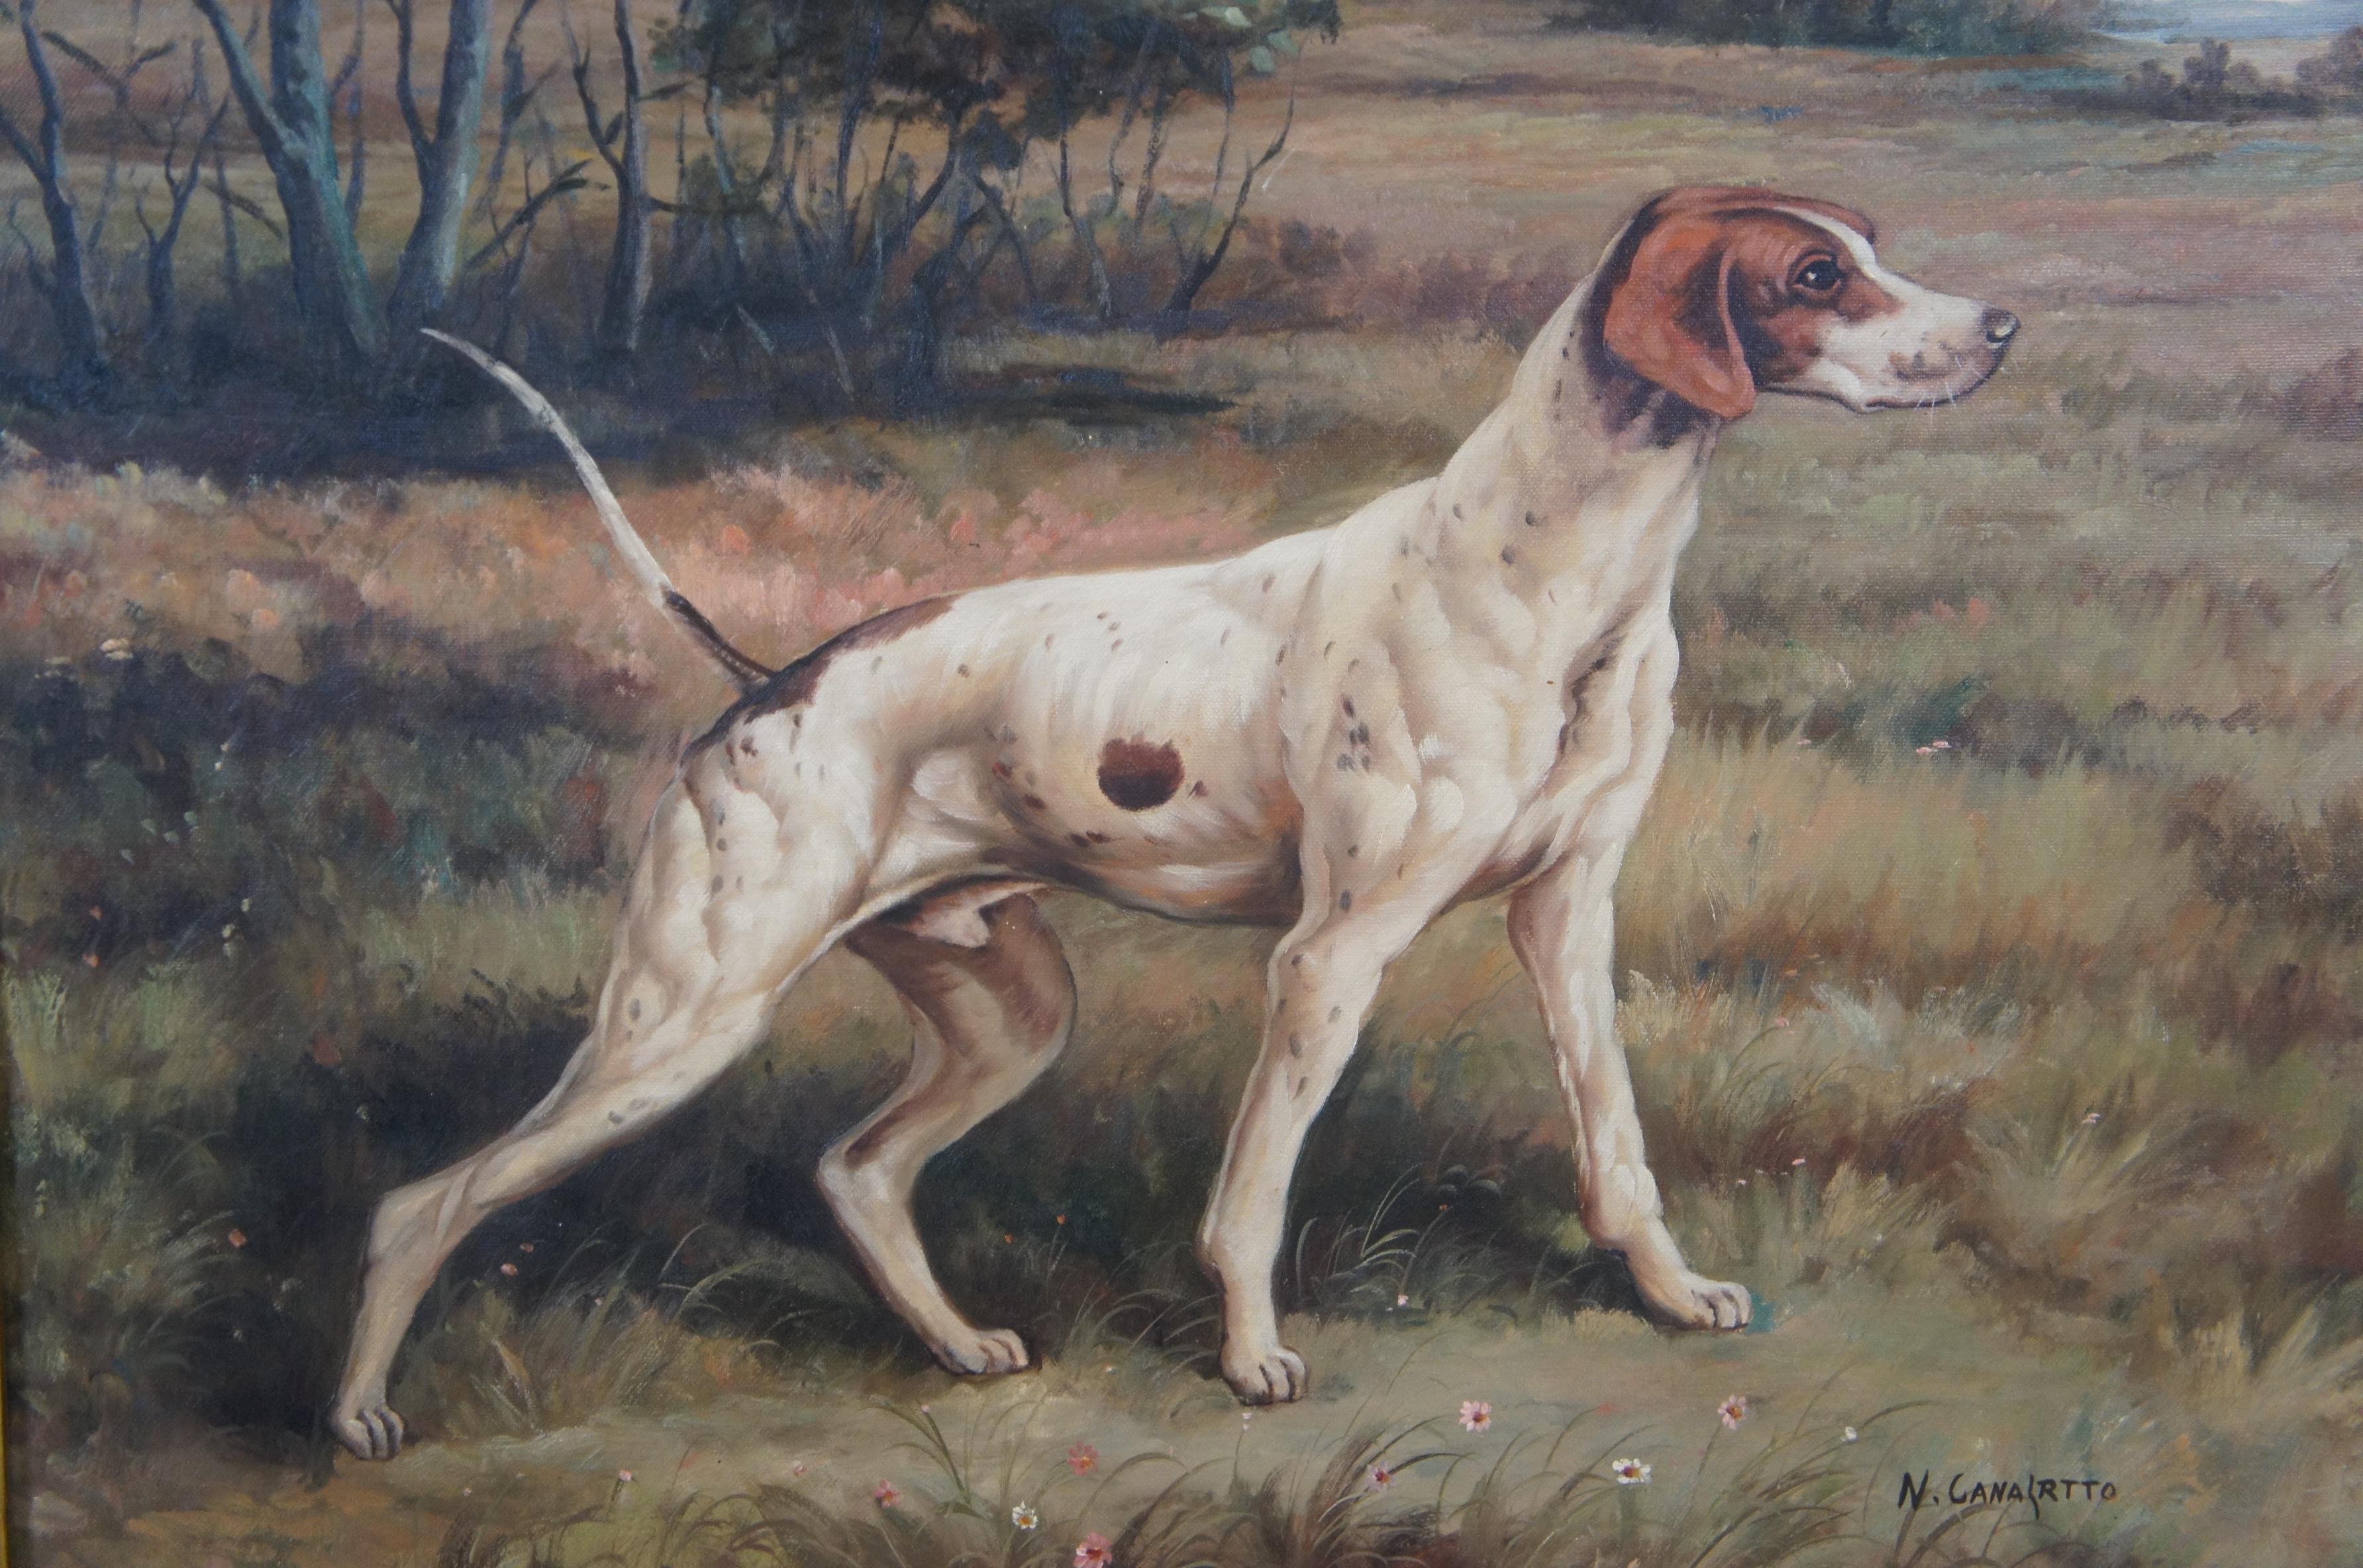 Vintage Pointer Hunting Dog Landscape Portrait Oil Painting on Canvas 31